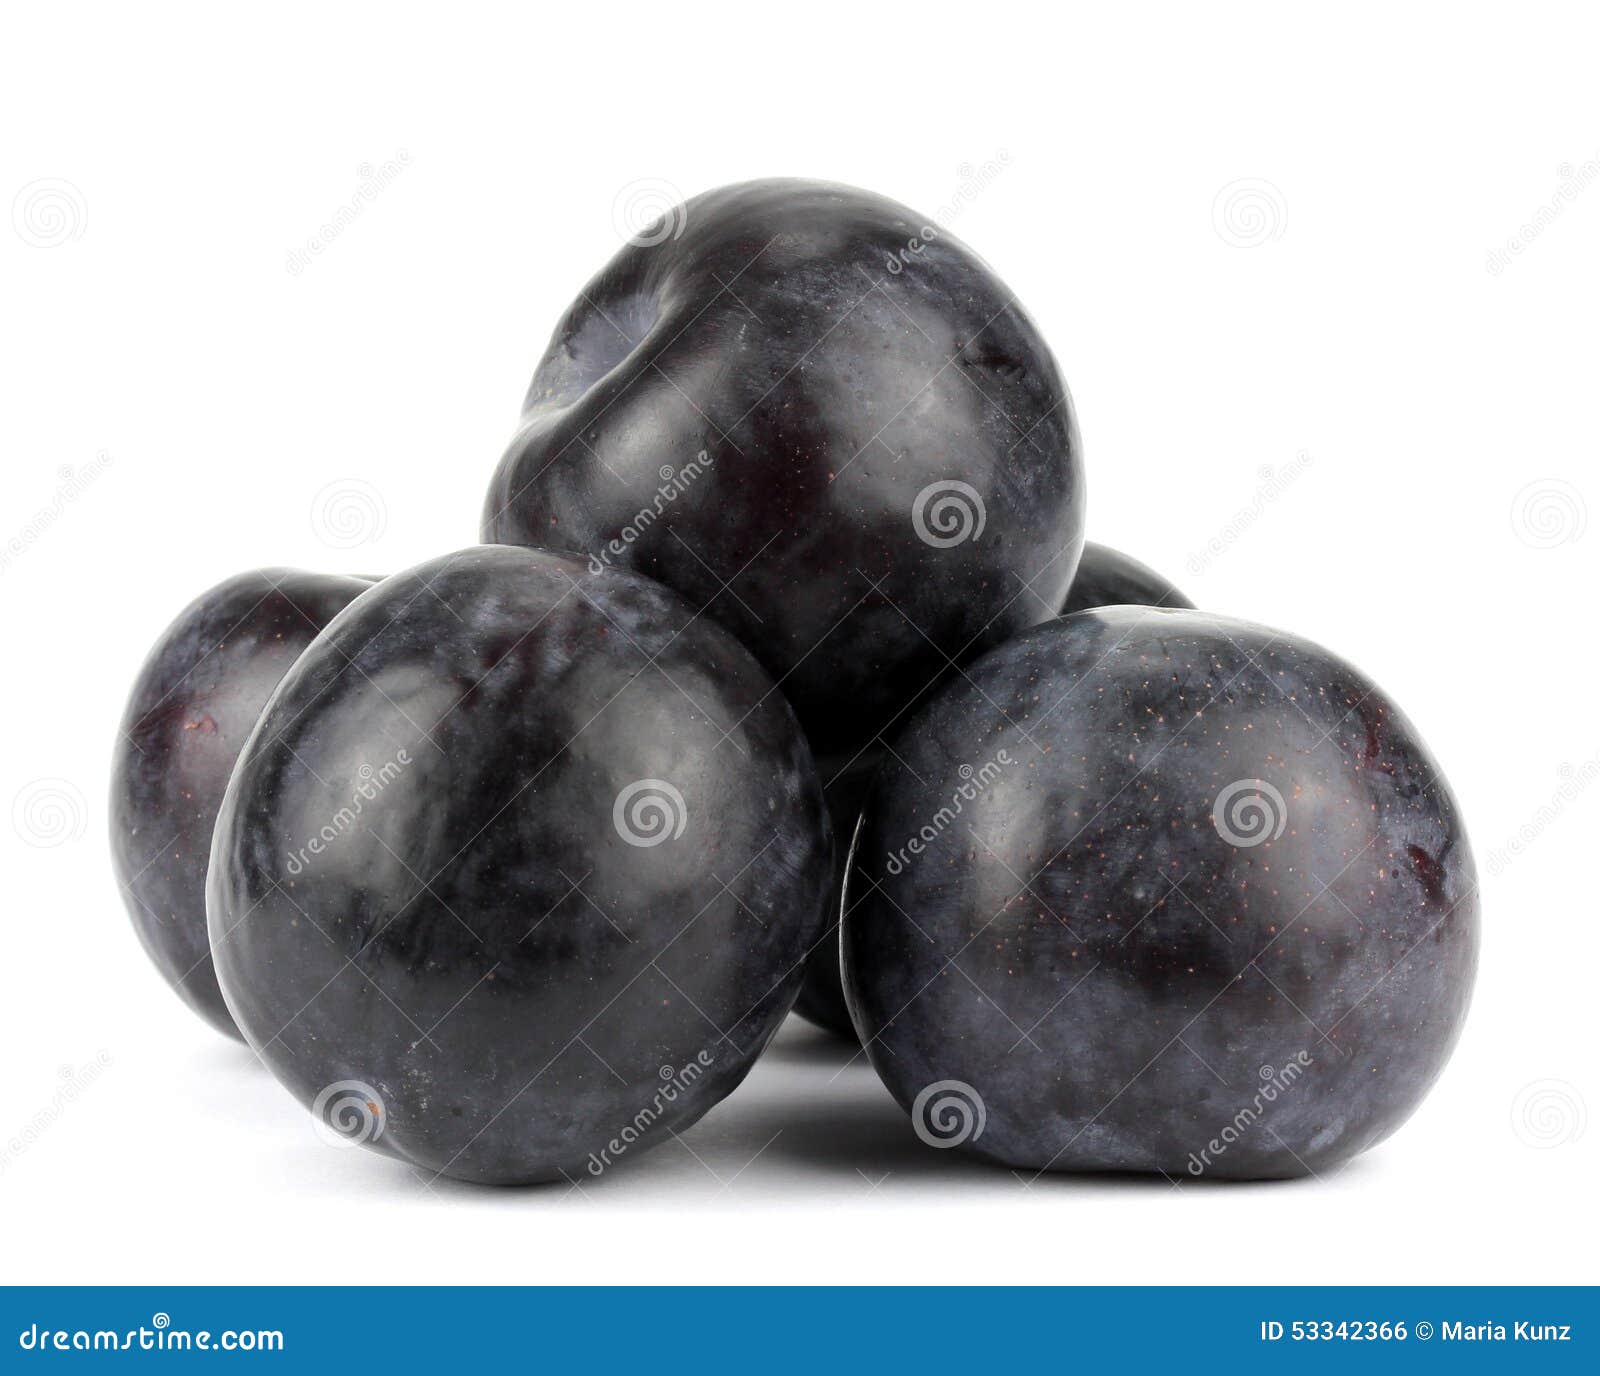 three black plums,  on white background